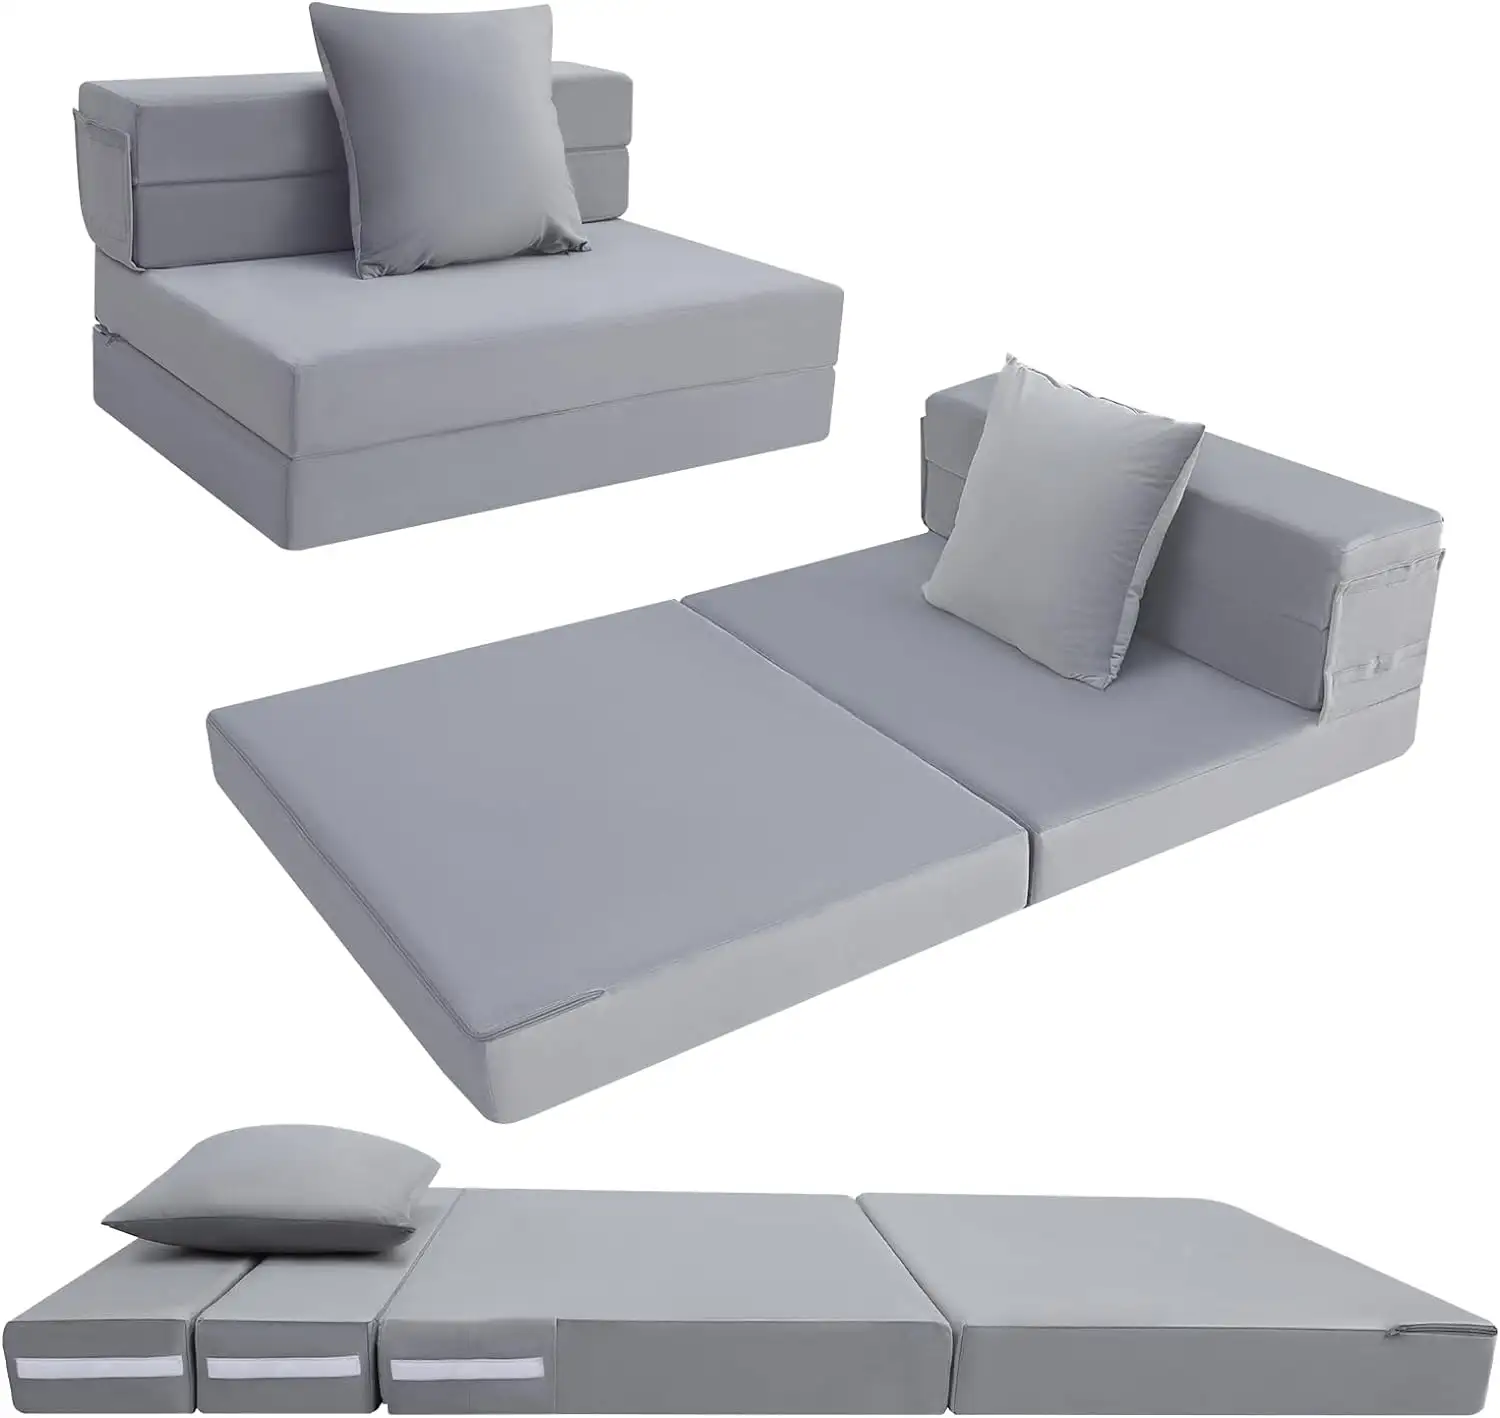 Custom American Style Hot Sale Multifunctional Futon Couch Memory Foam Sleeper Chair Guest Folding Sofa Bed Mattress